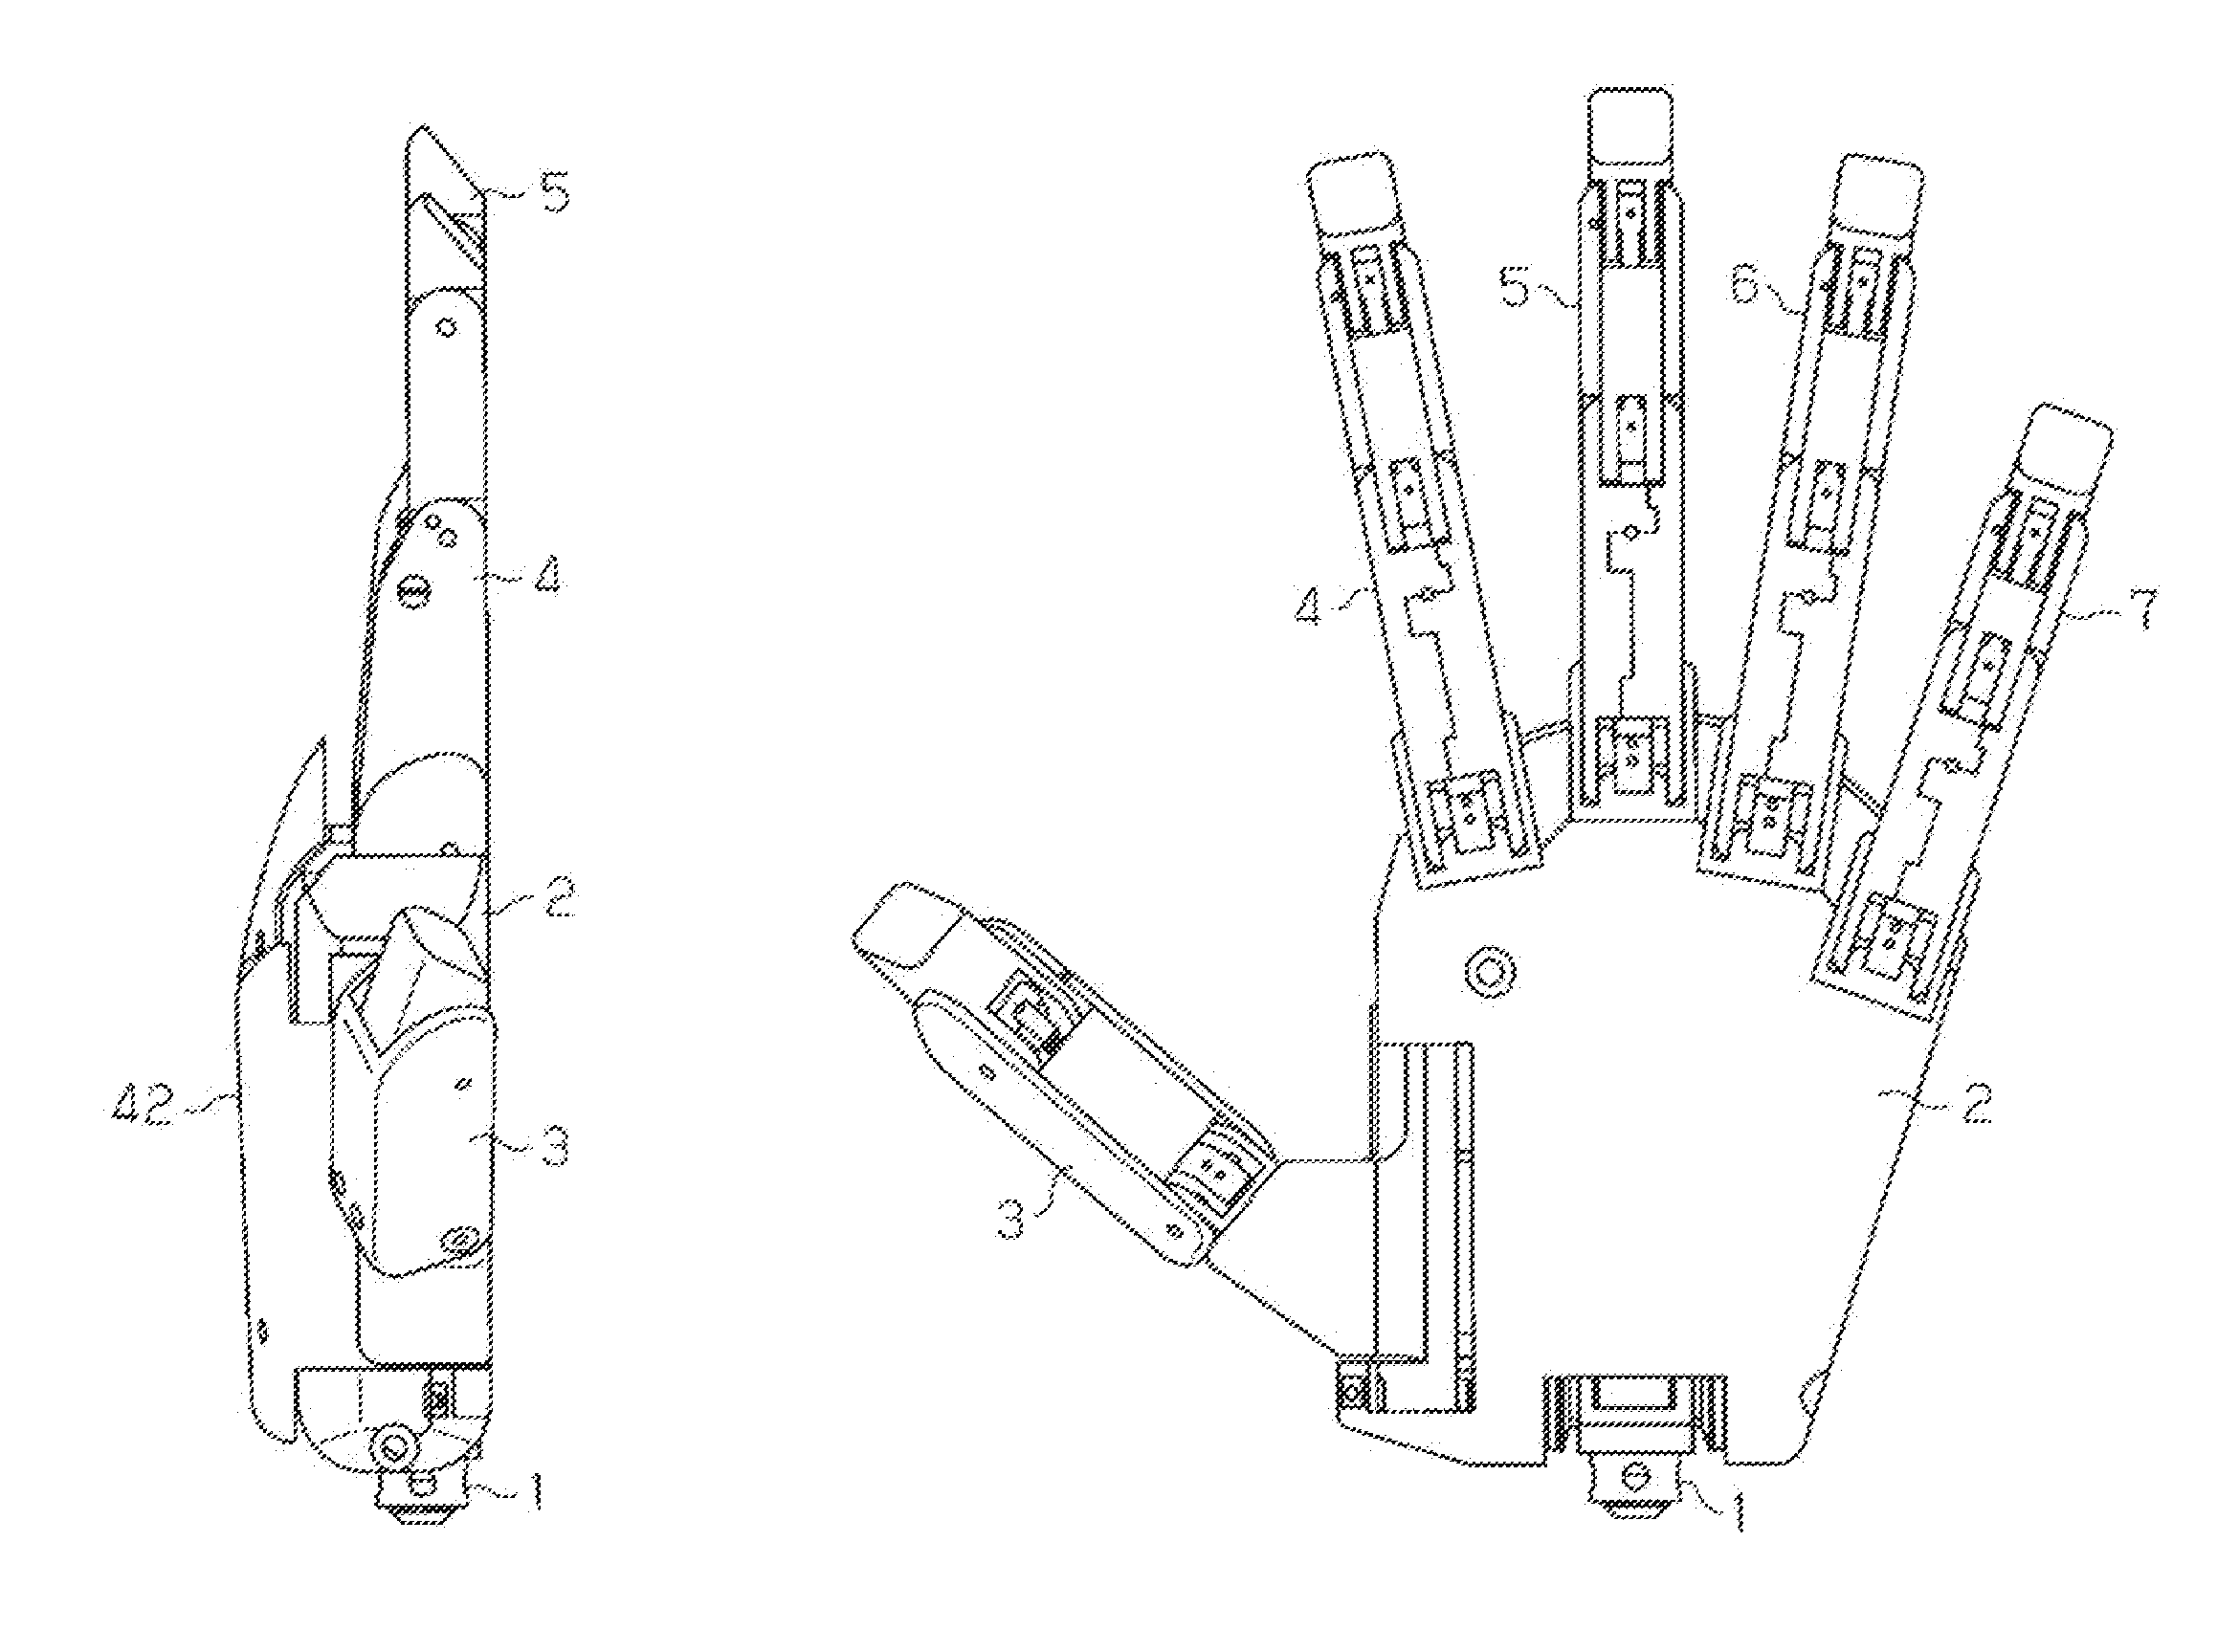 Humanoid electric hand